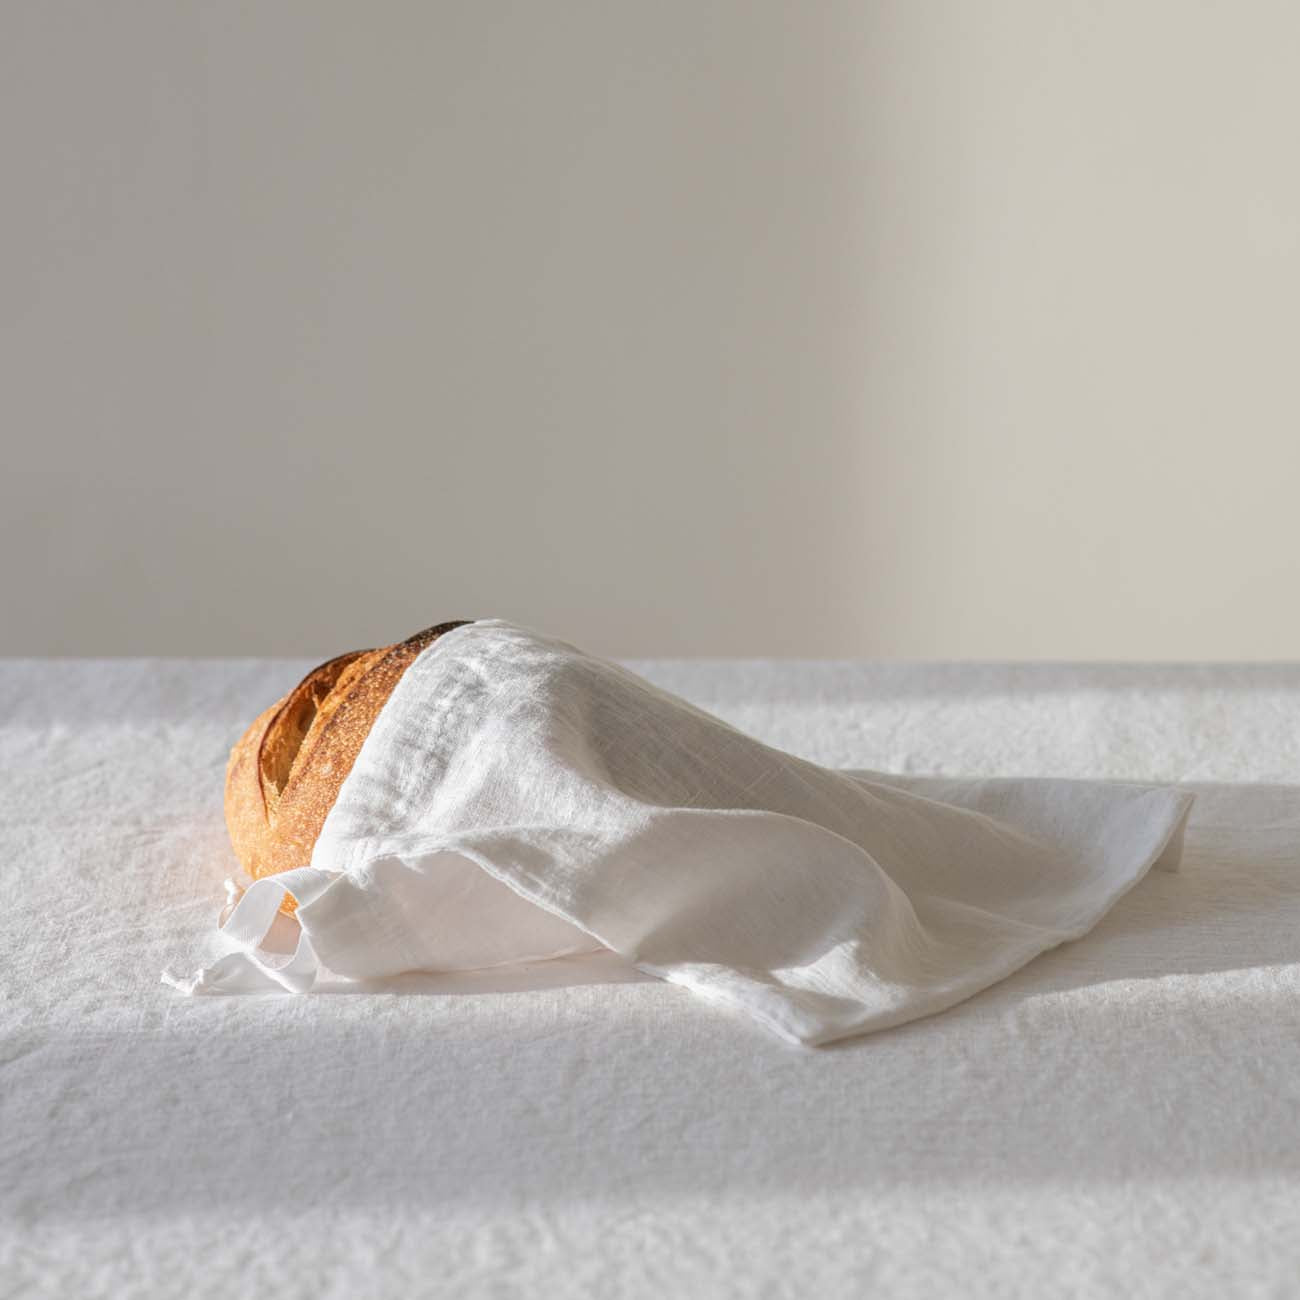 Washed linen bread bag